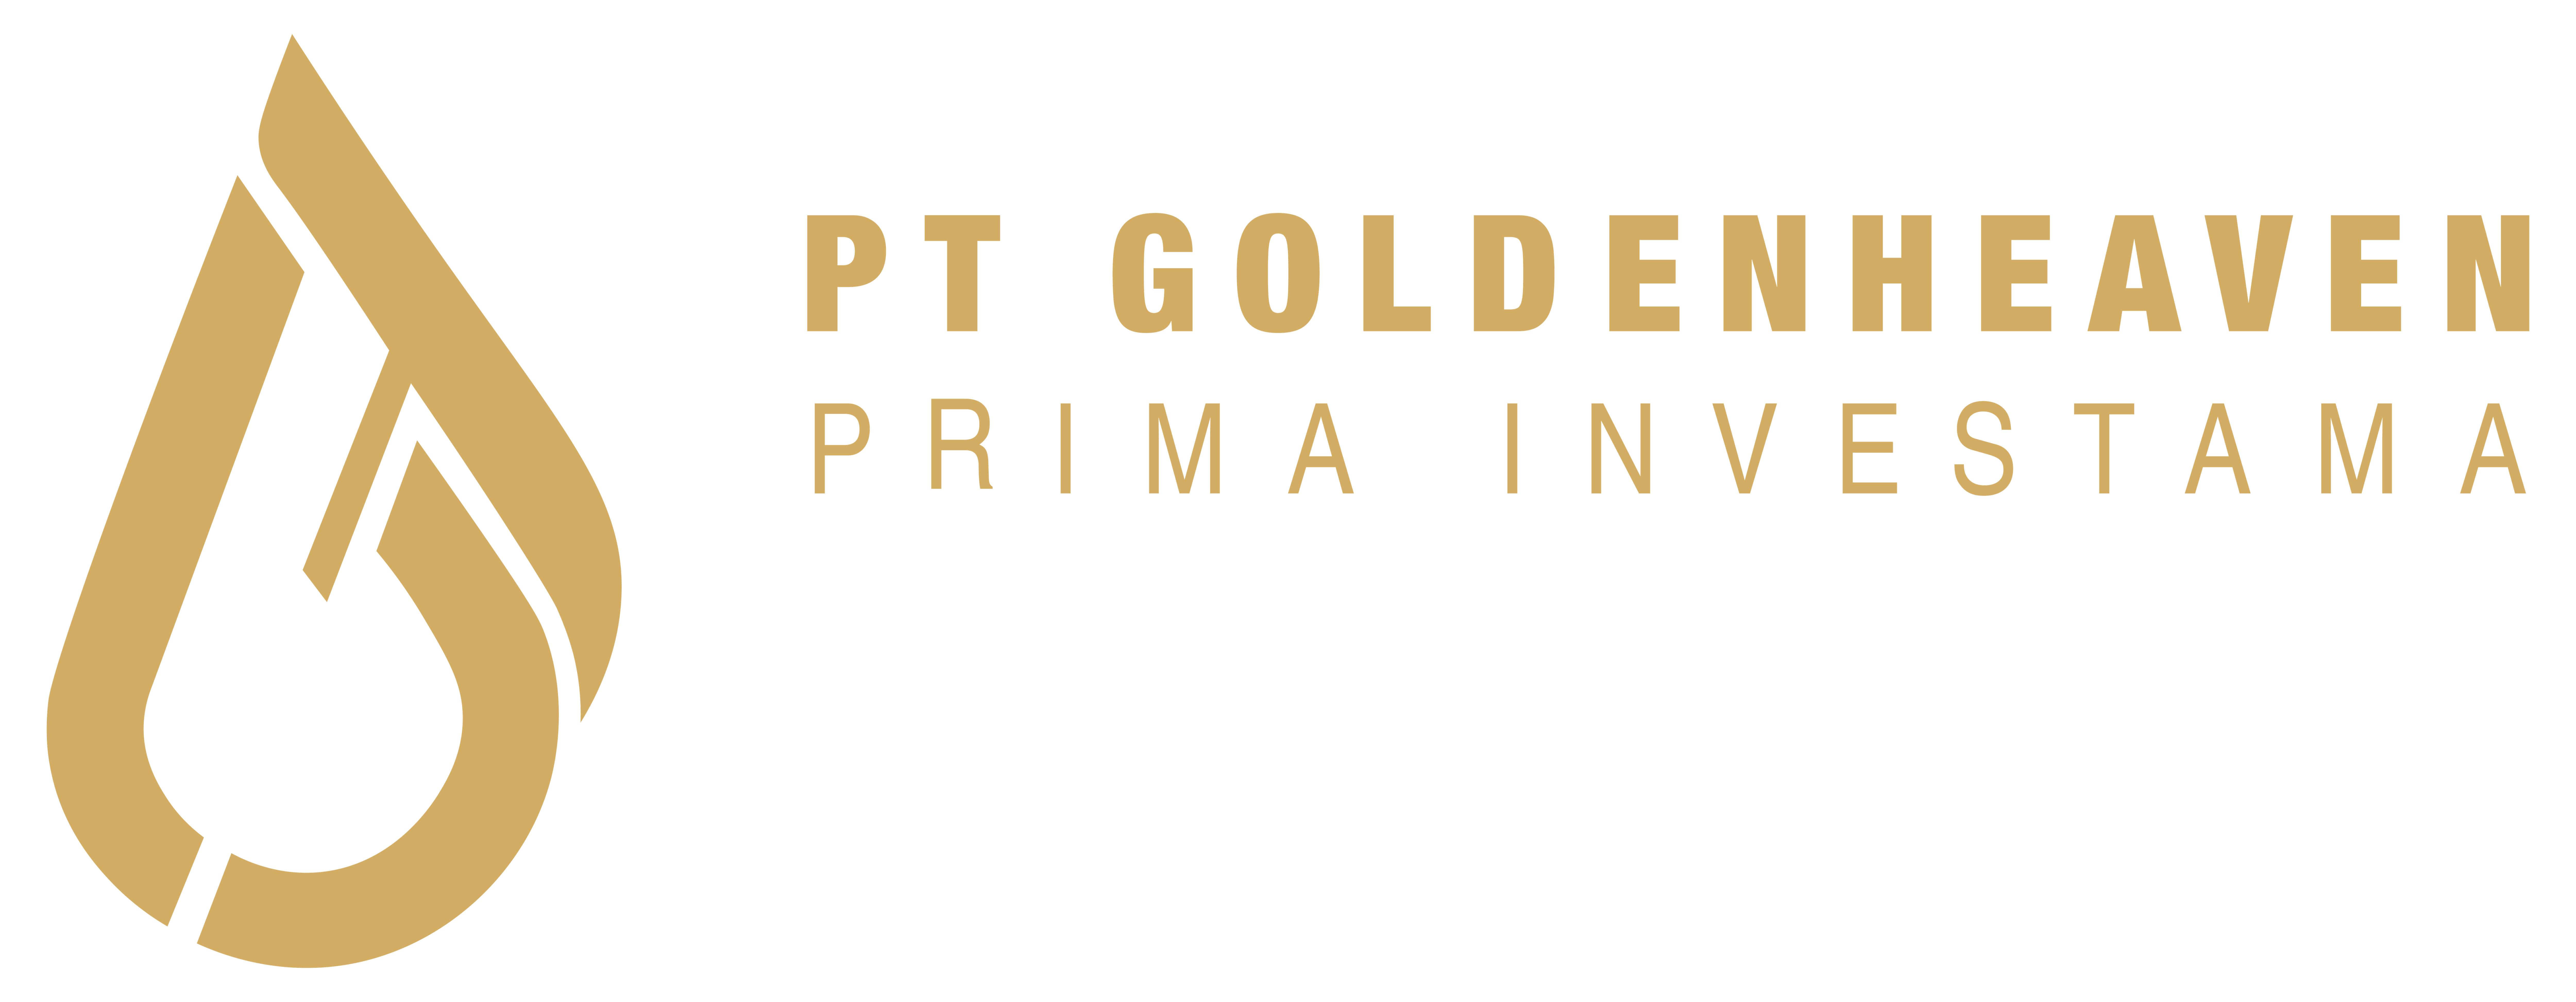 GoldenHeaven Prima Investama